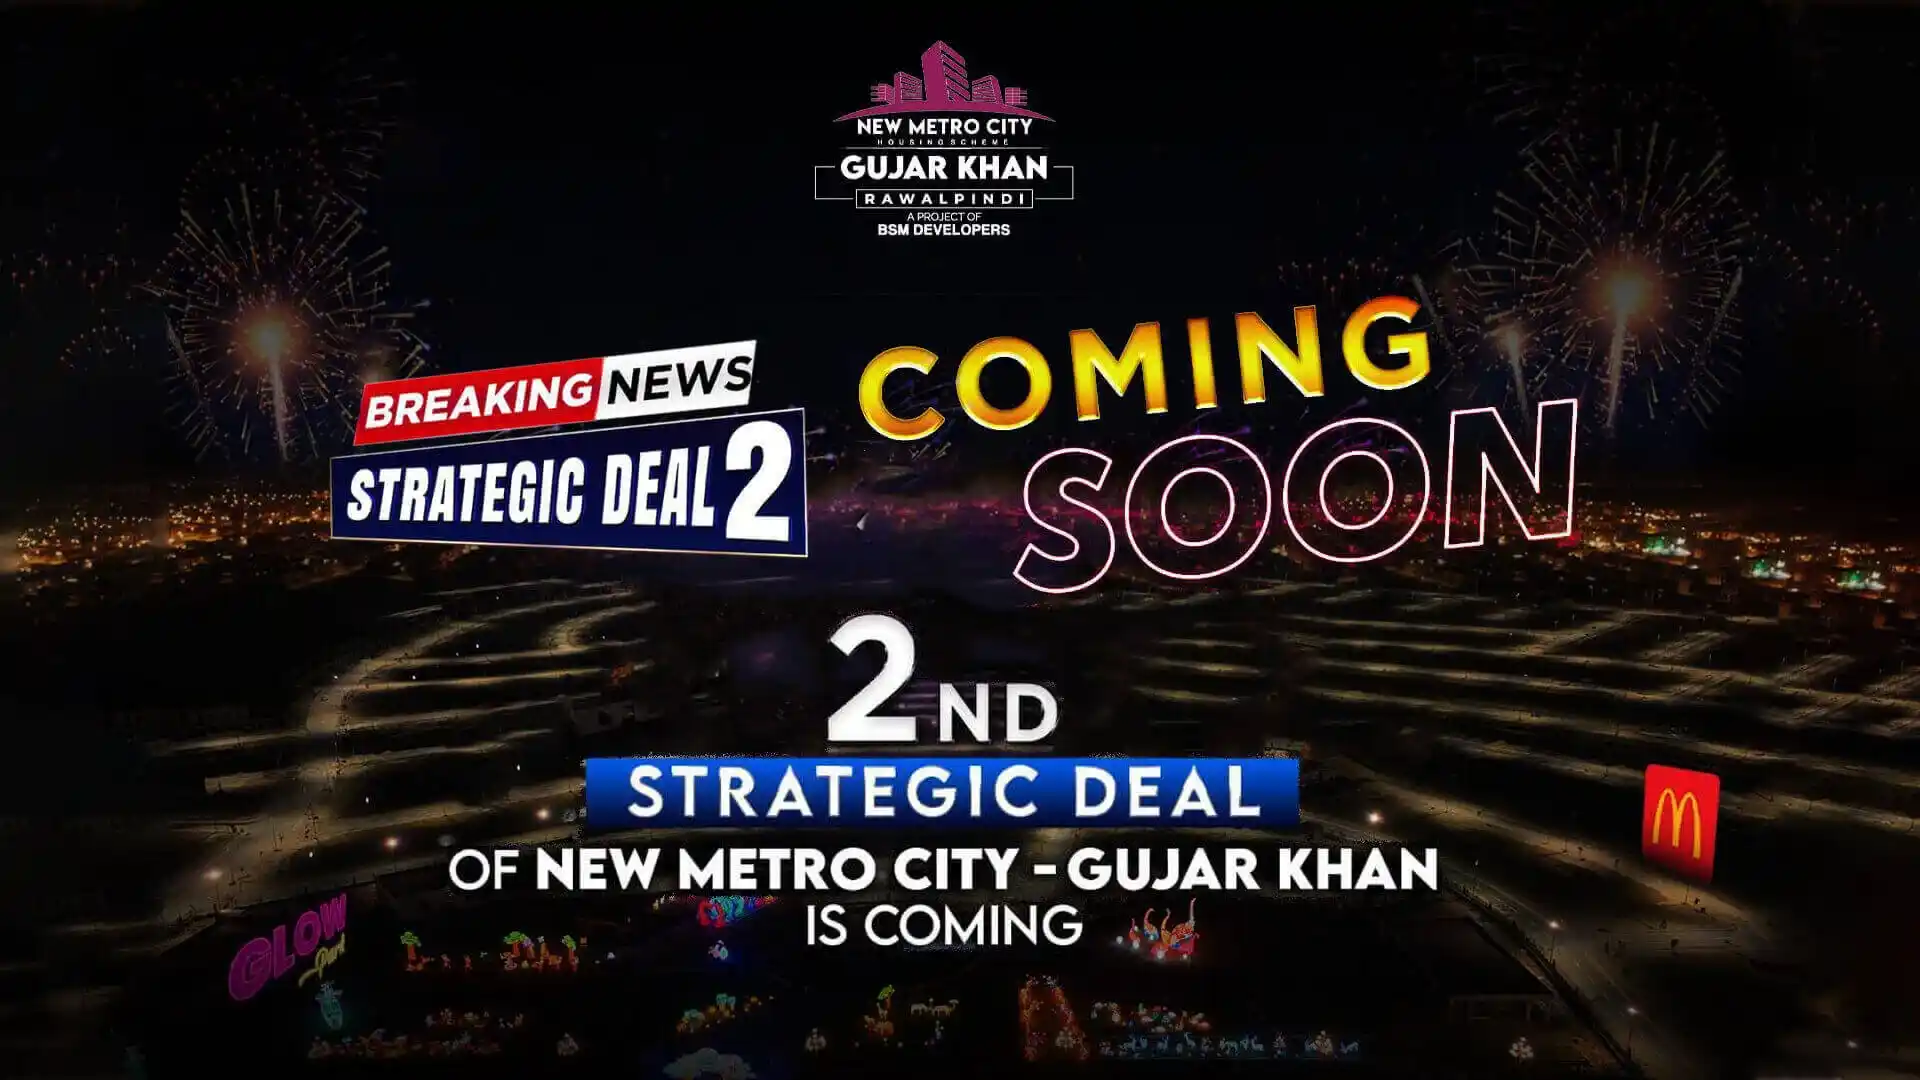 2nd strategic deal New Metro City Gujar Khan Development calender